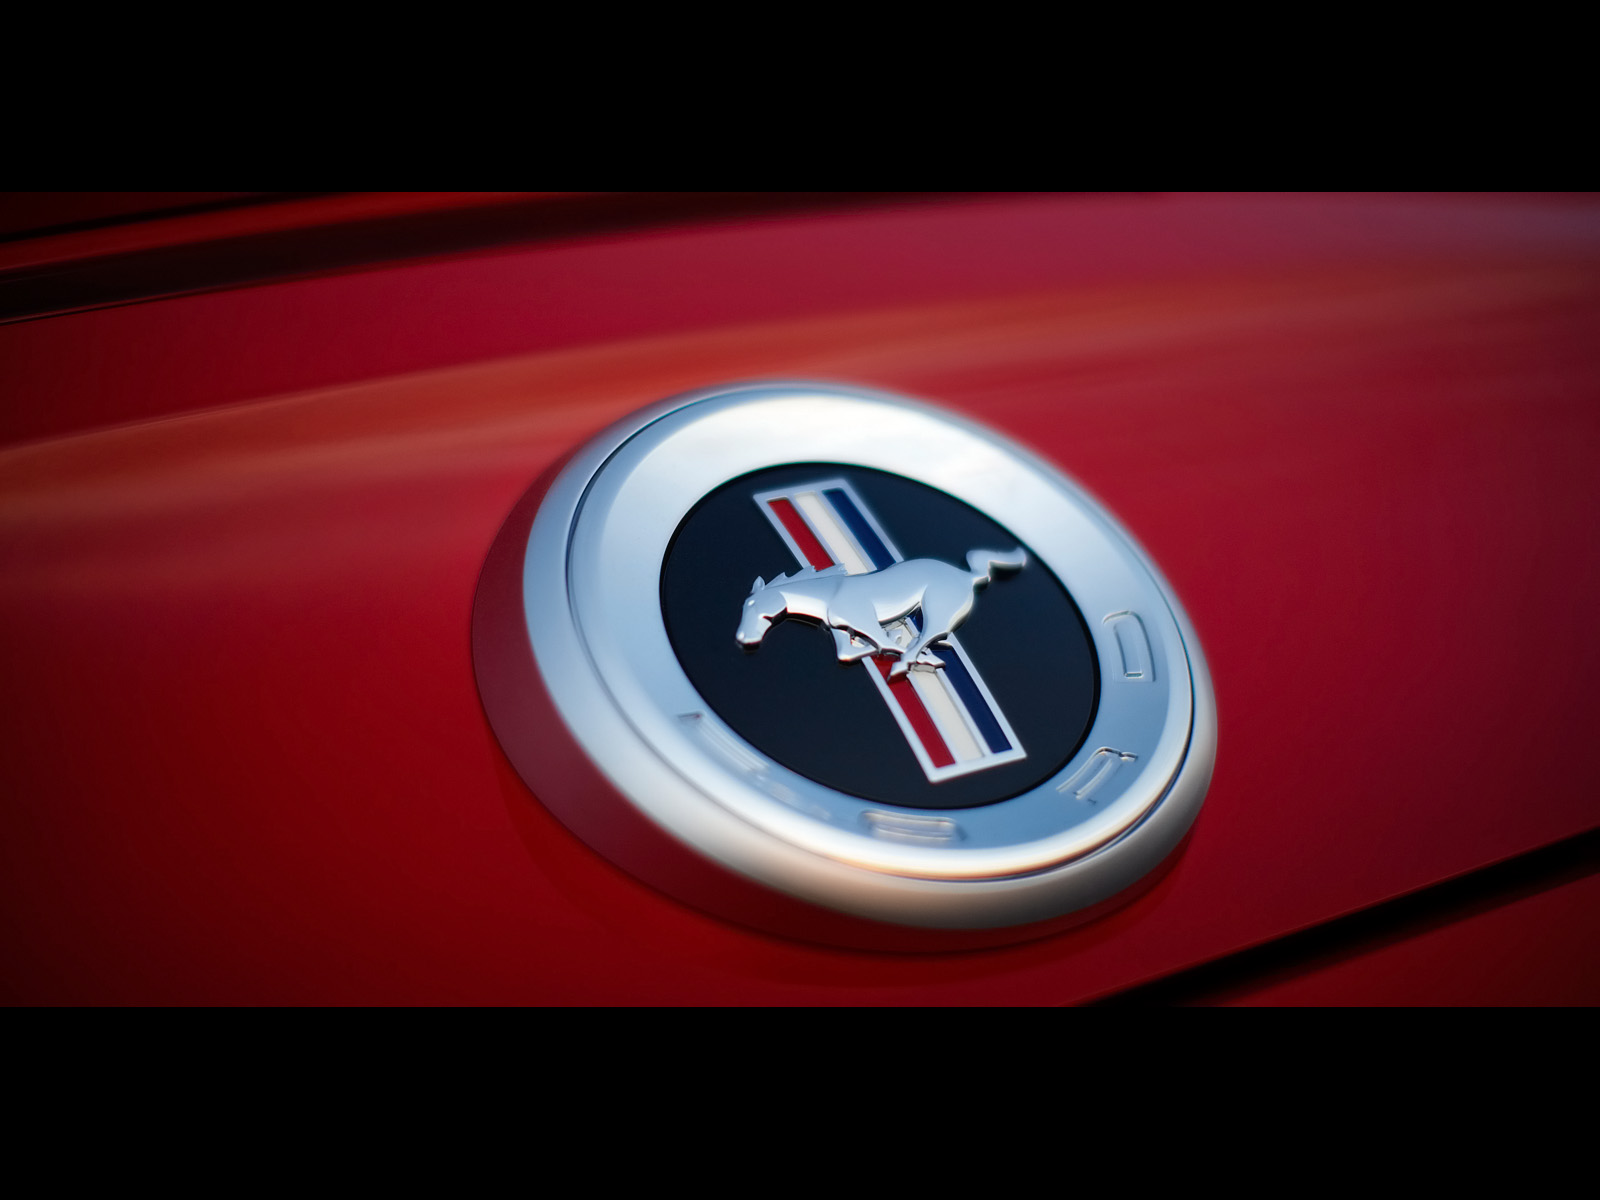 2010 Ford Mustang   Rear Emblem   1600x1200   Wallpaper